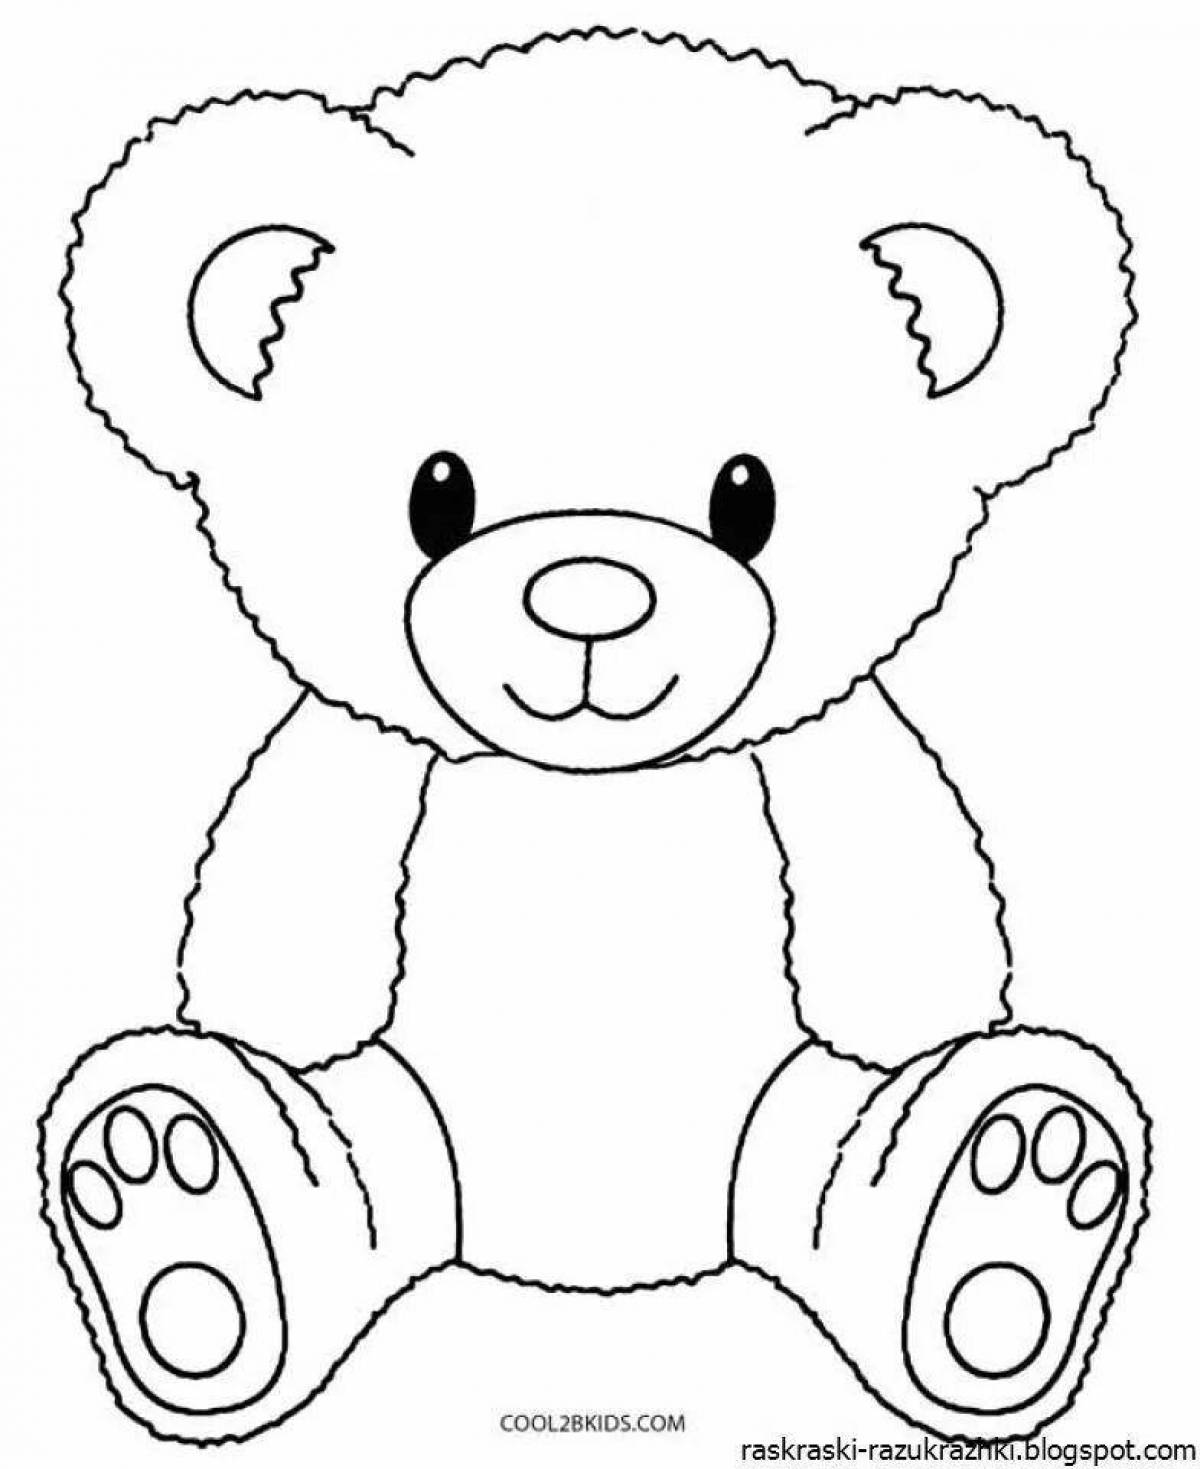 Coloring bright-eyed teddy bear